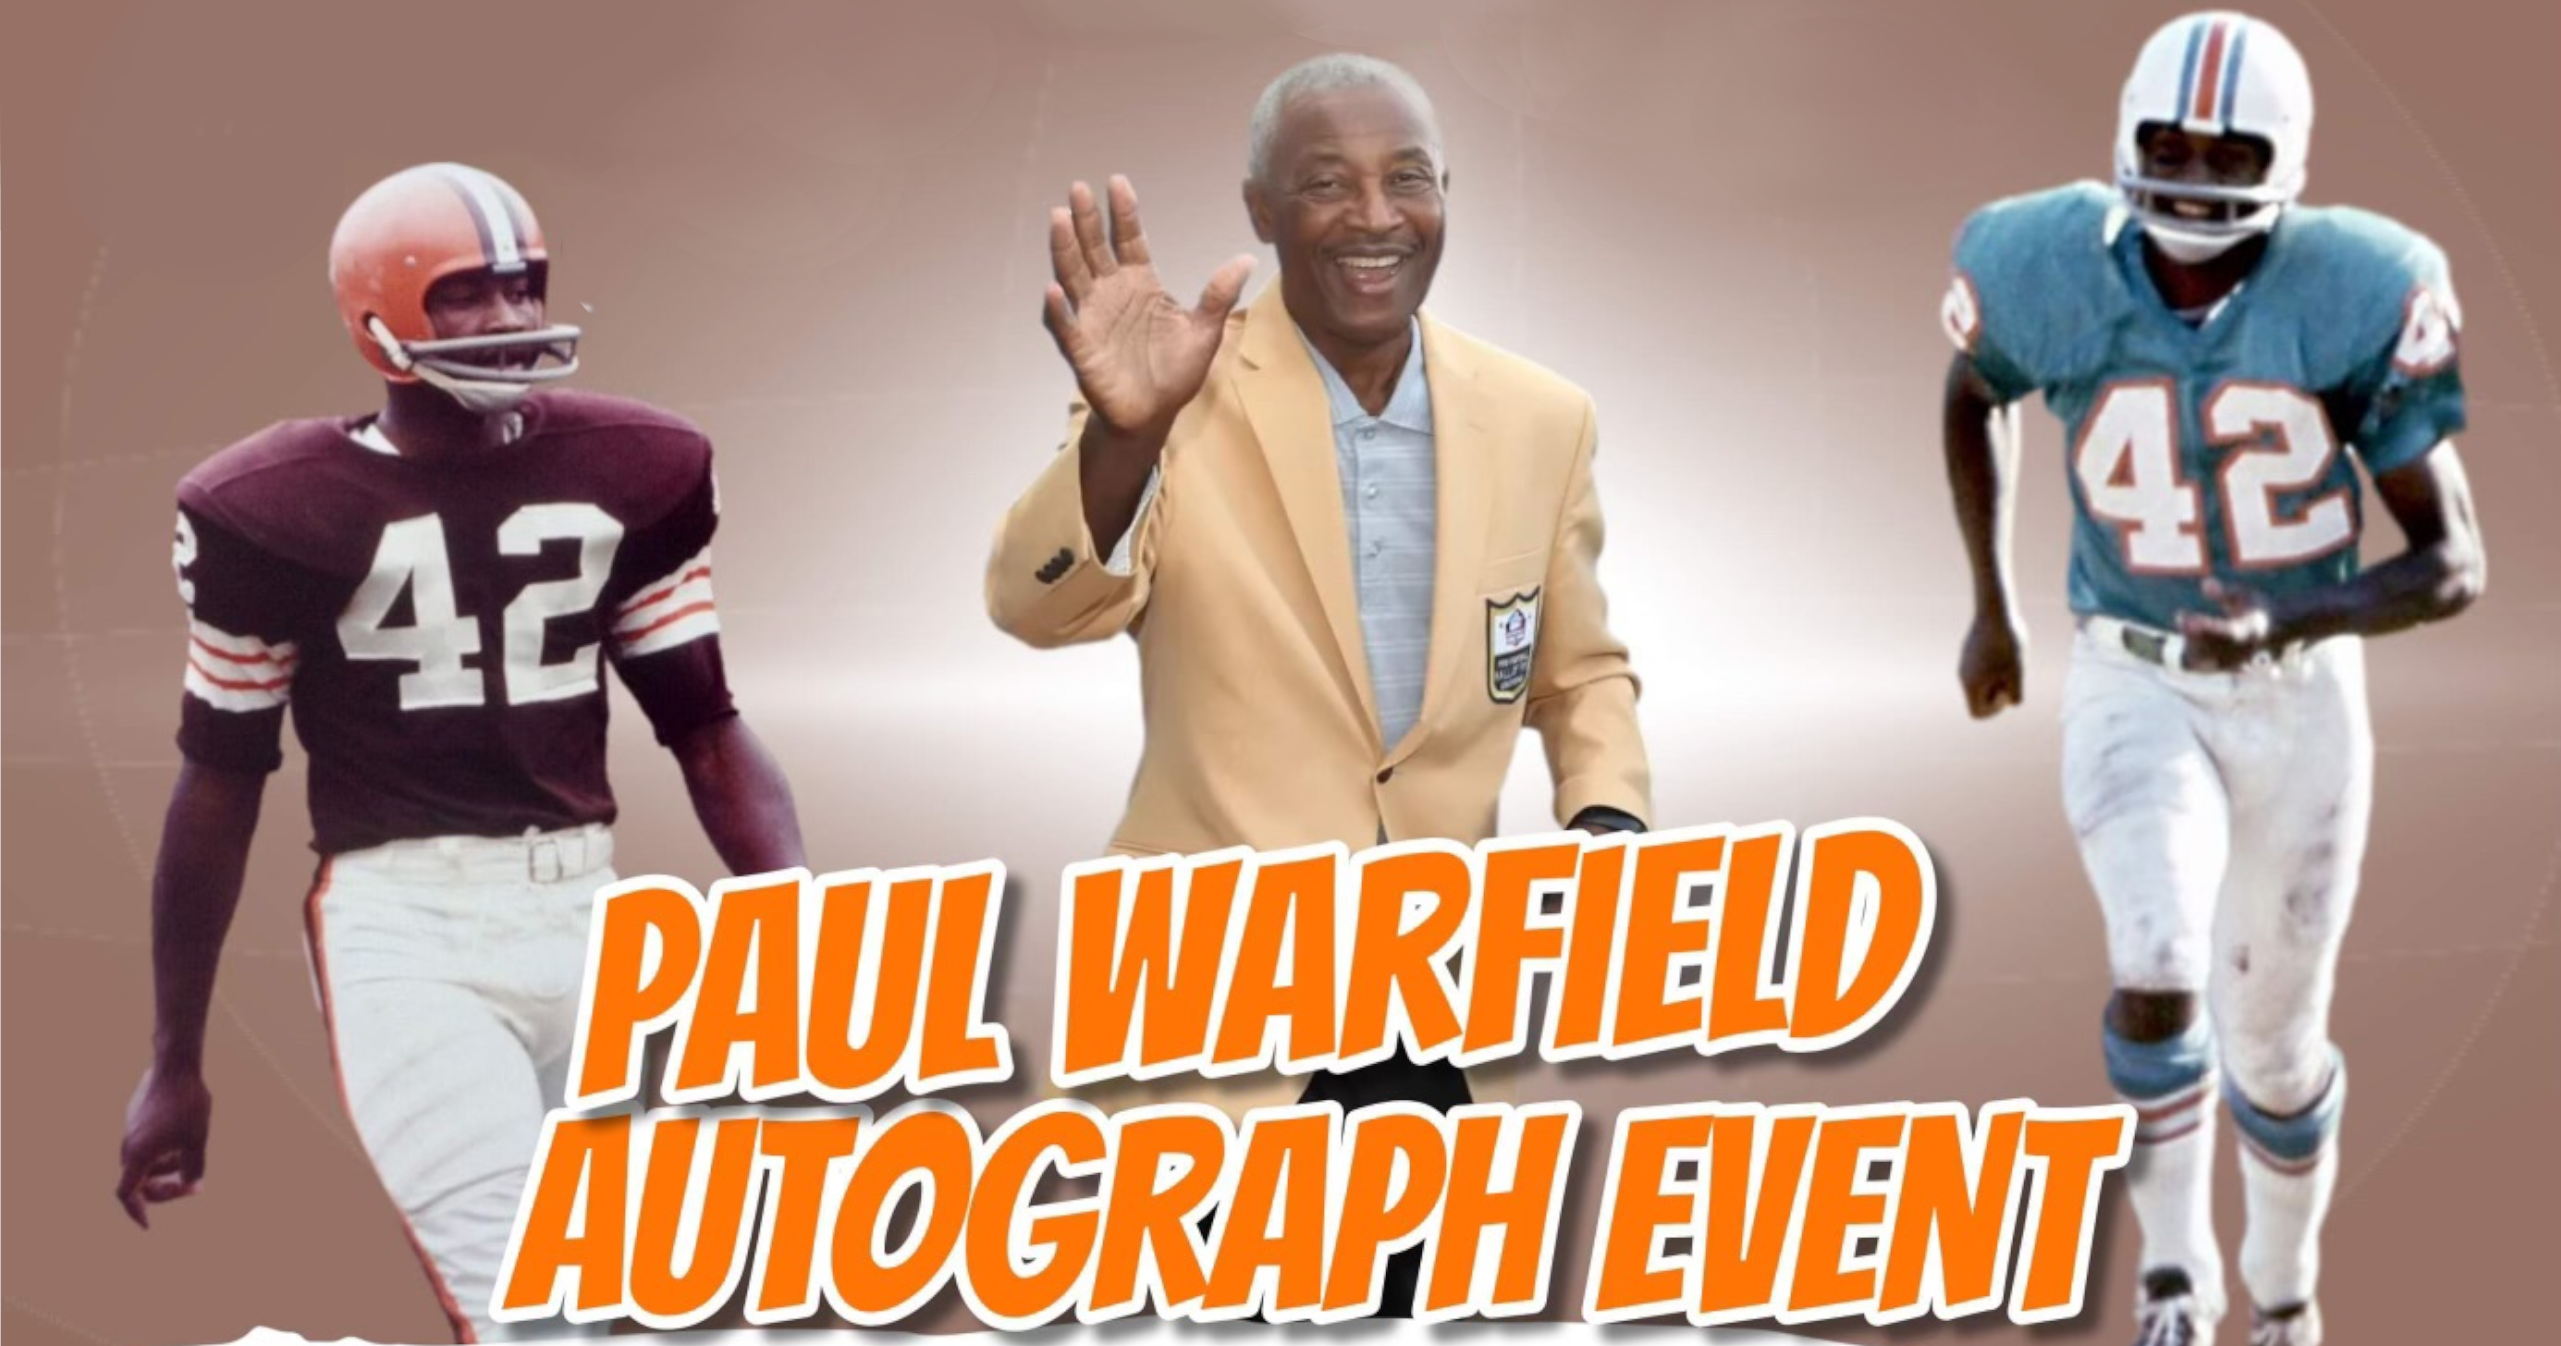 Paul Warfield Autograph Event